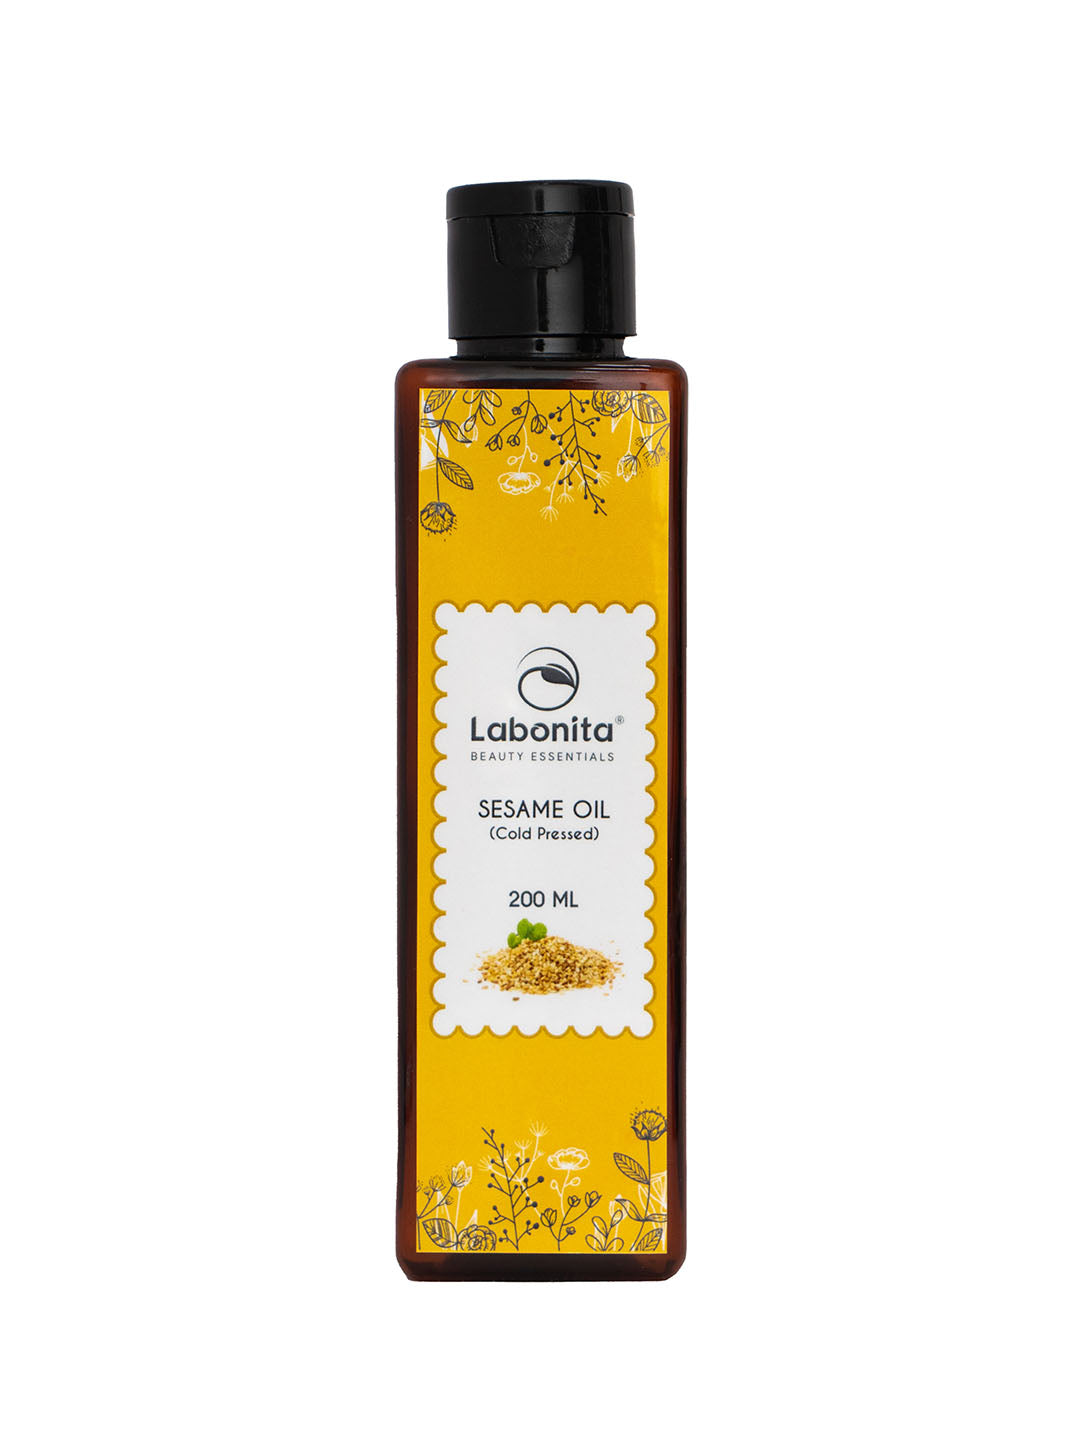 Cold Pressed Sesame Oil For Skin, Body & Hair Massage Oil